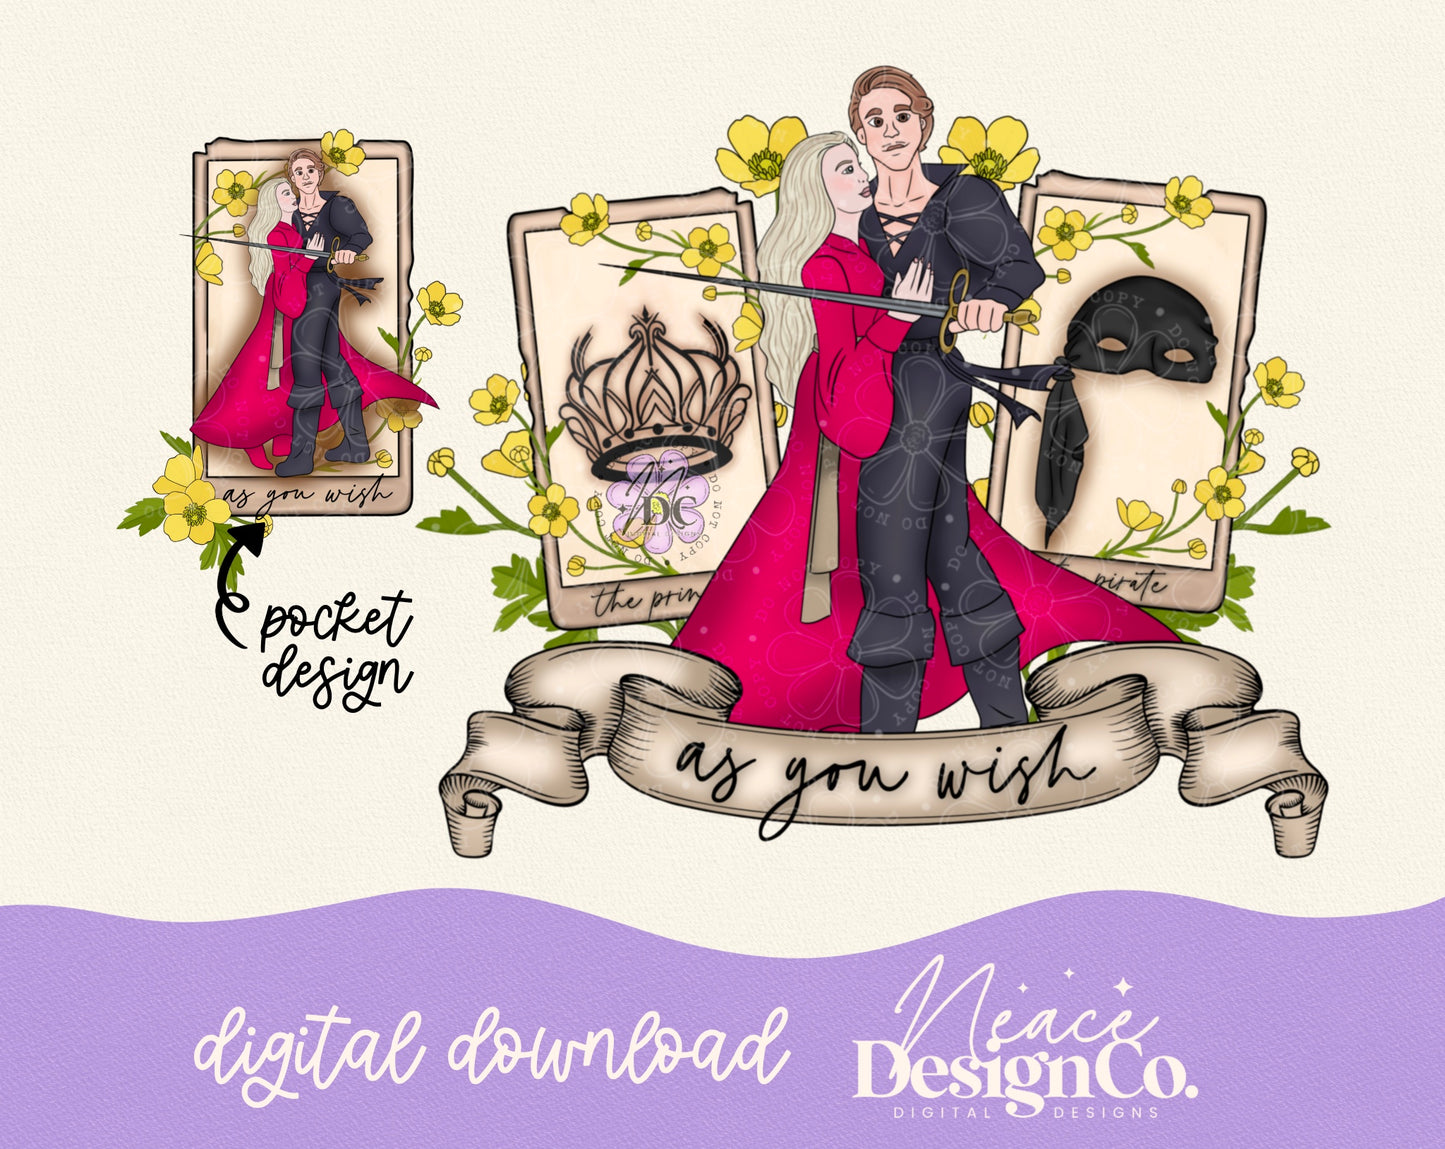 As You Wish Princess Bride w/Pocket Digital PNG